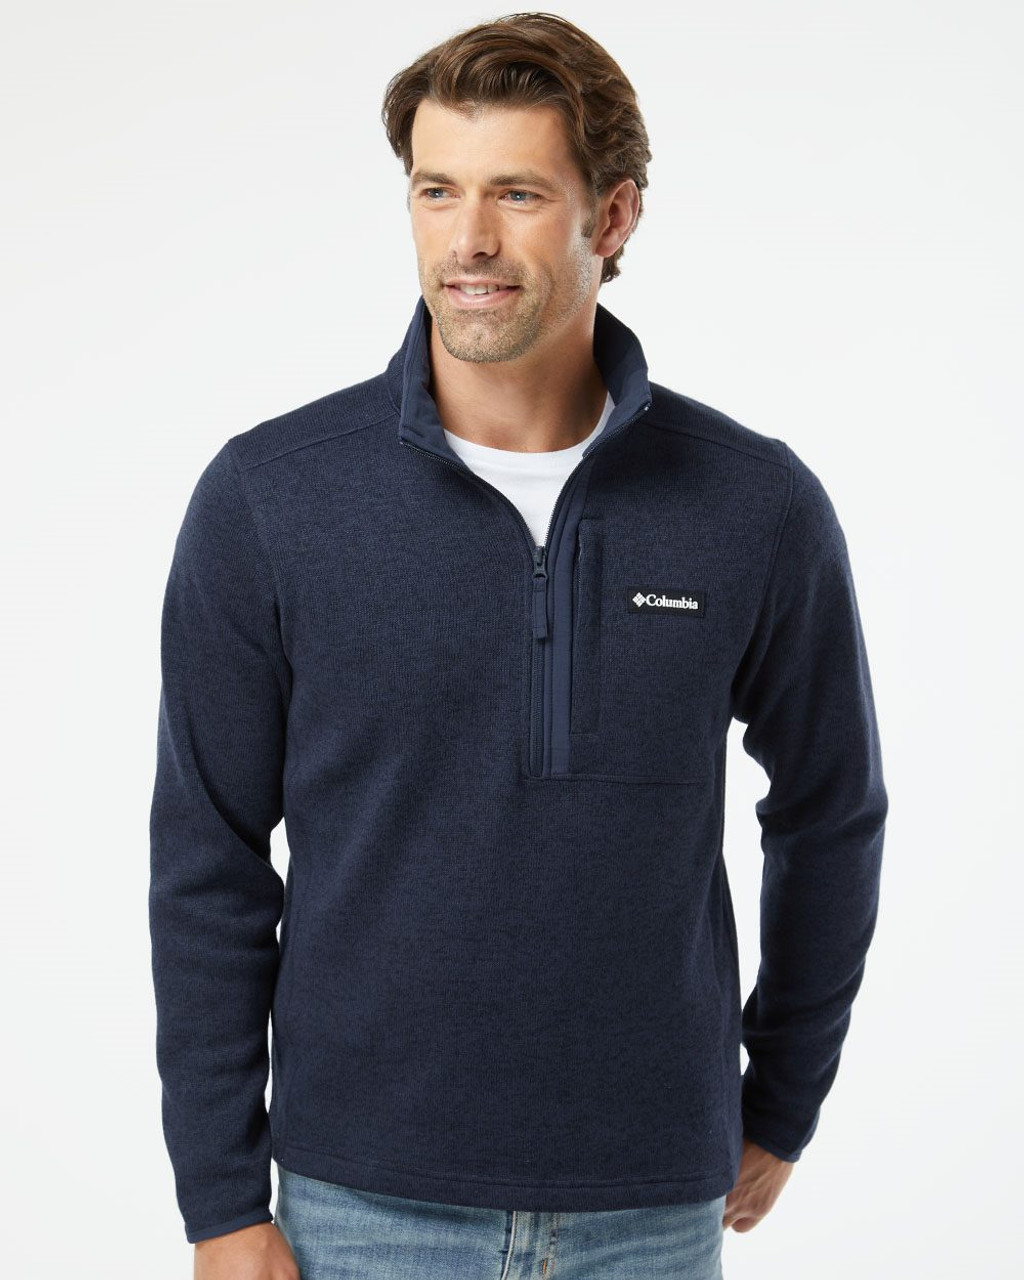 Embroidered Sweater Weather™ Half-Zip - 195411